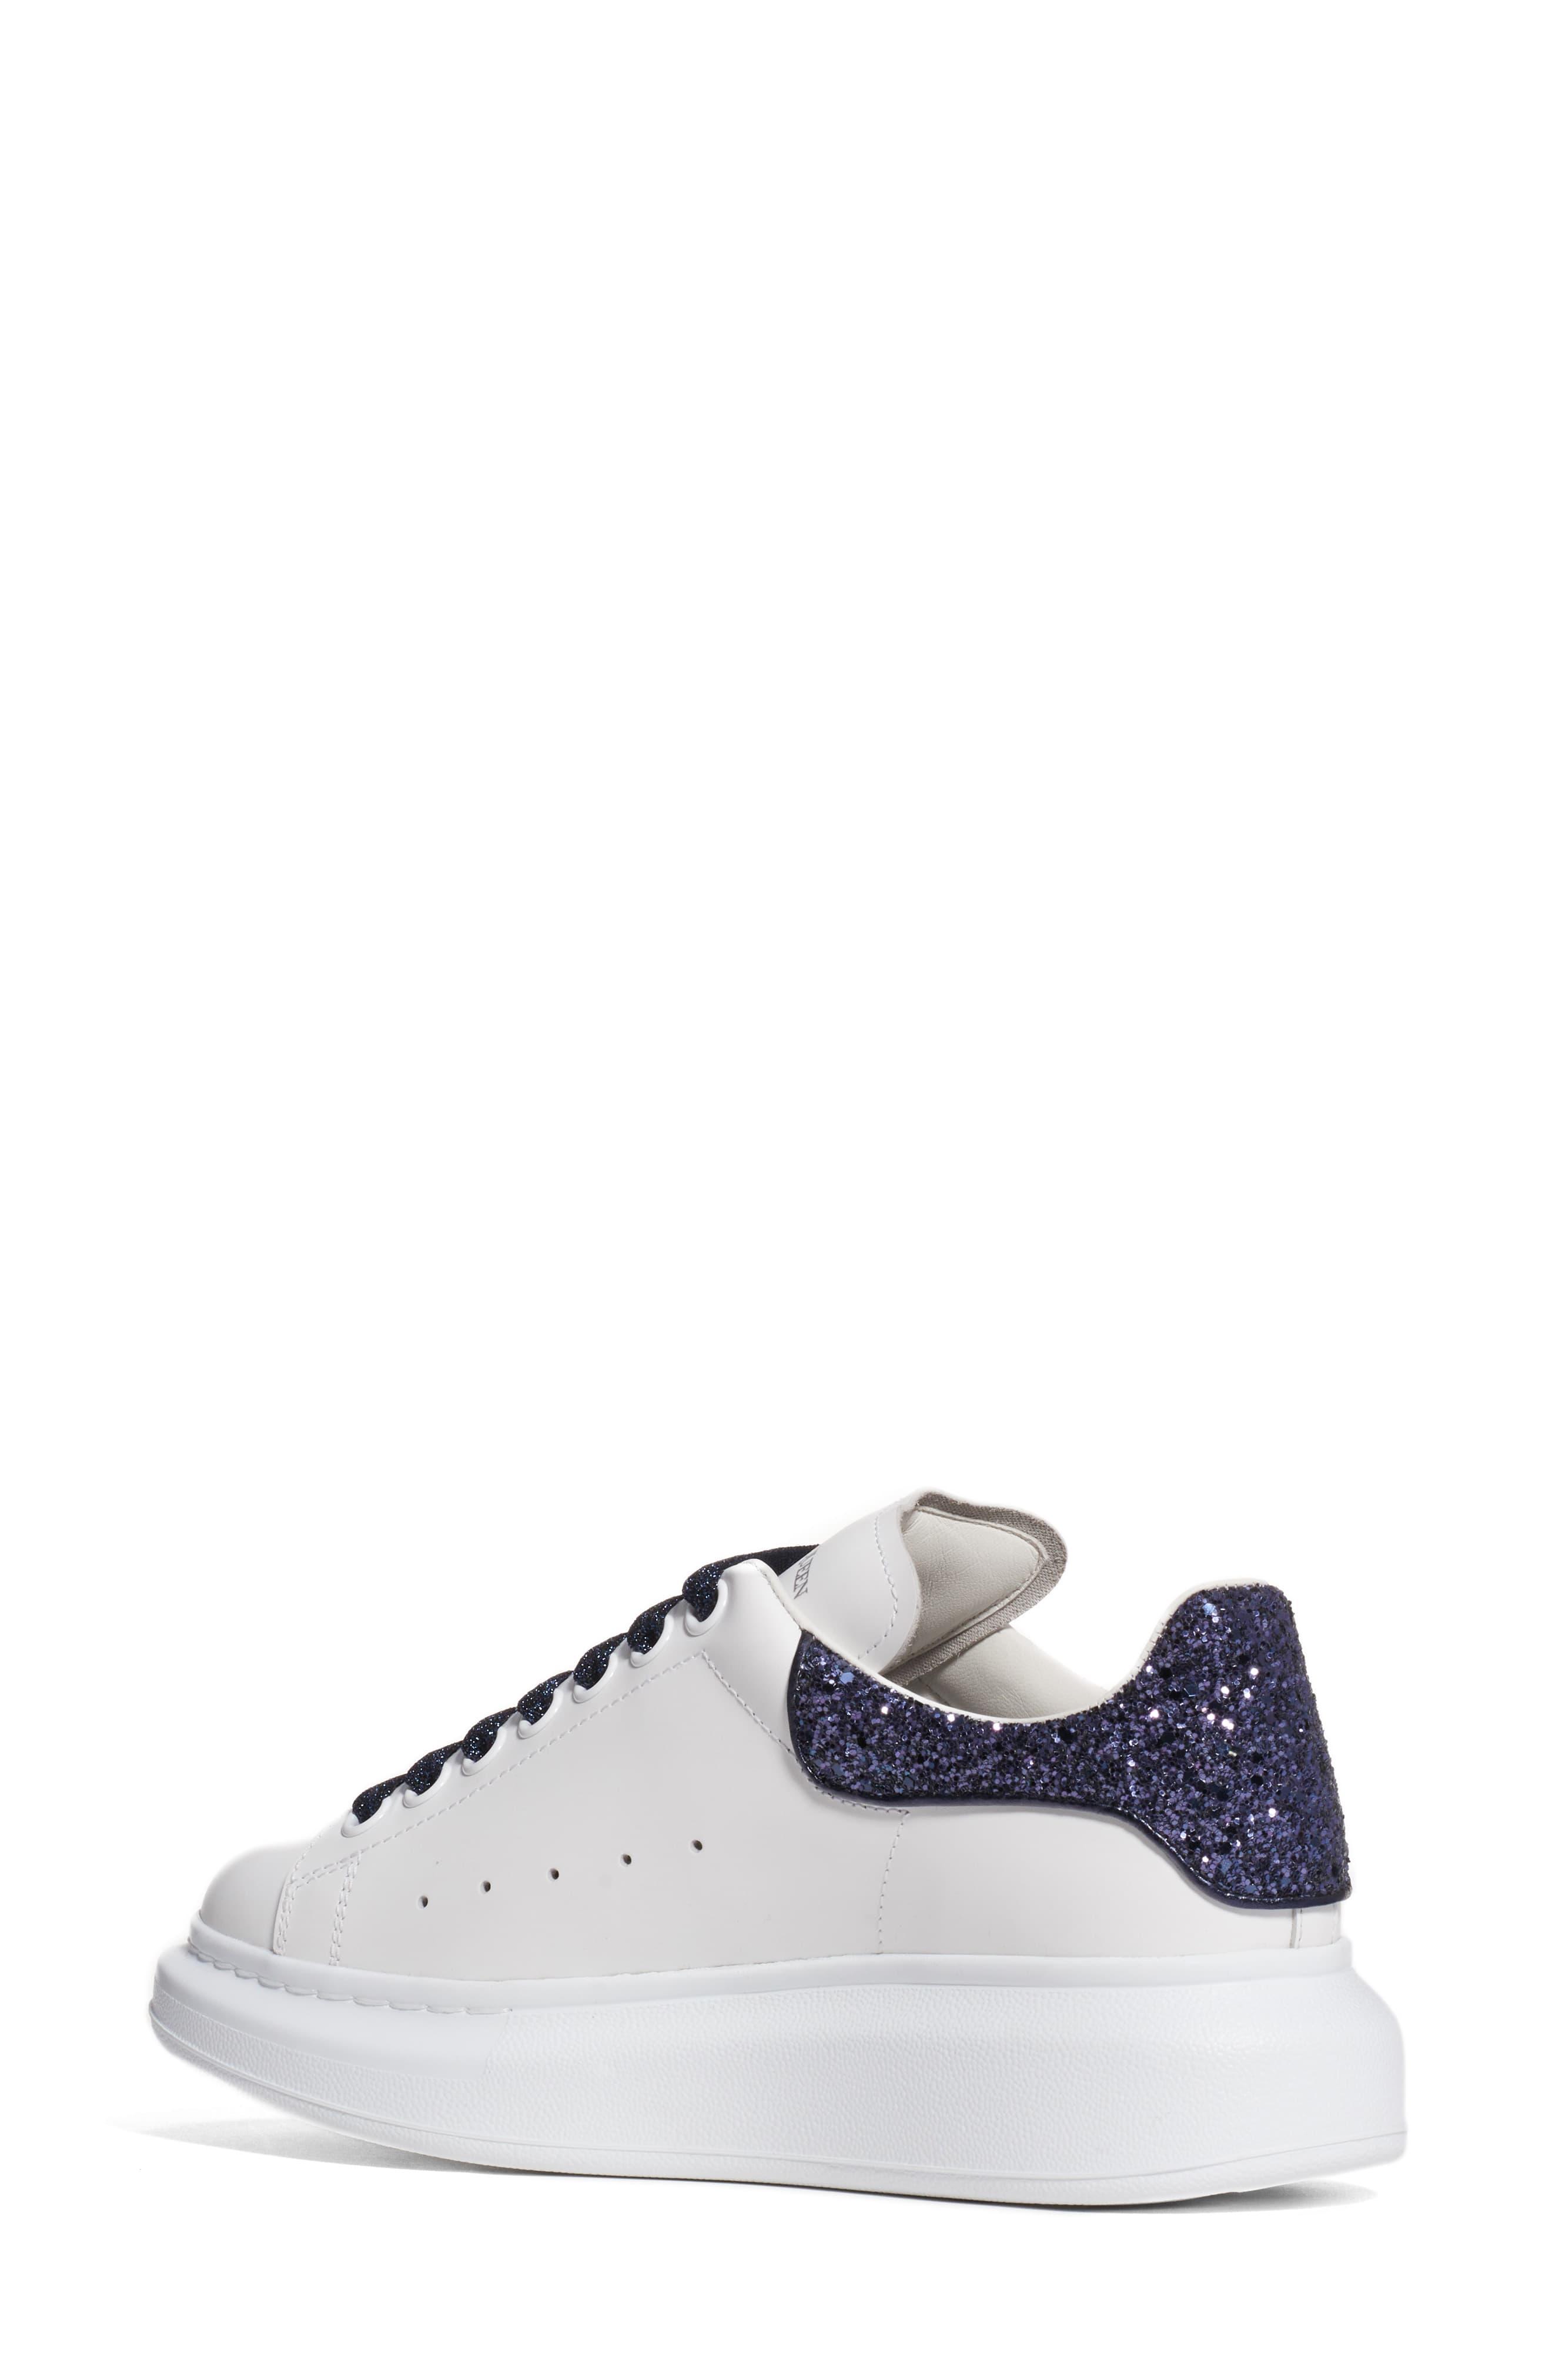 Alexander McQueen Rubber Sneaker in White/ Navy Glitter (Blue) - Lyst